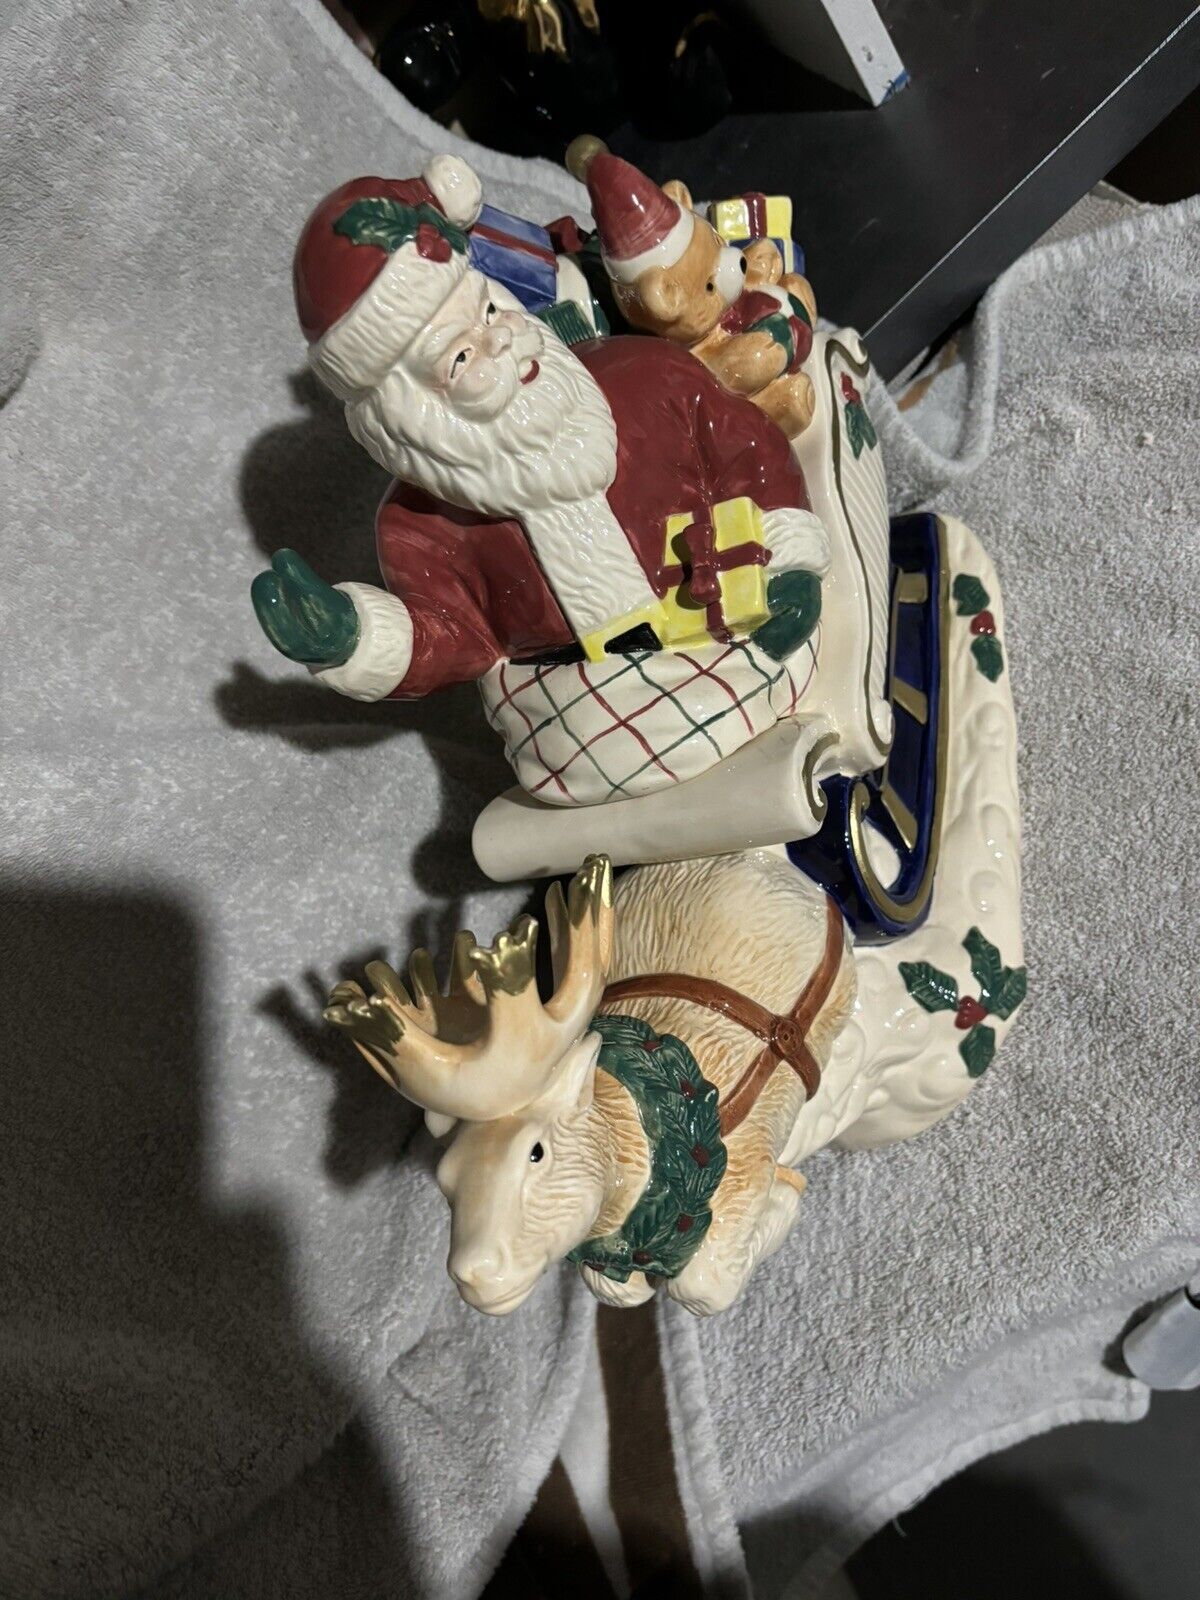 Fitz and Floyd Vtg Omnibus Santa Sleigh Reindeer Cookie Jar 1993 Excellent Cond